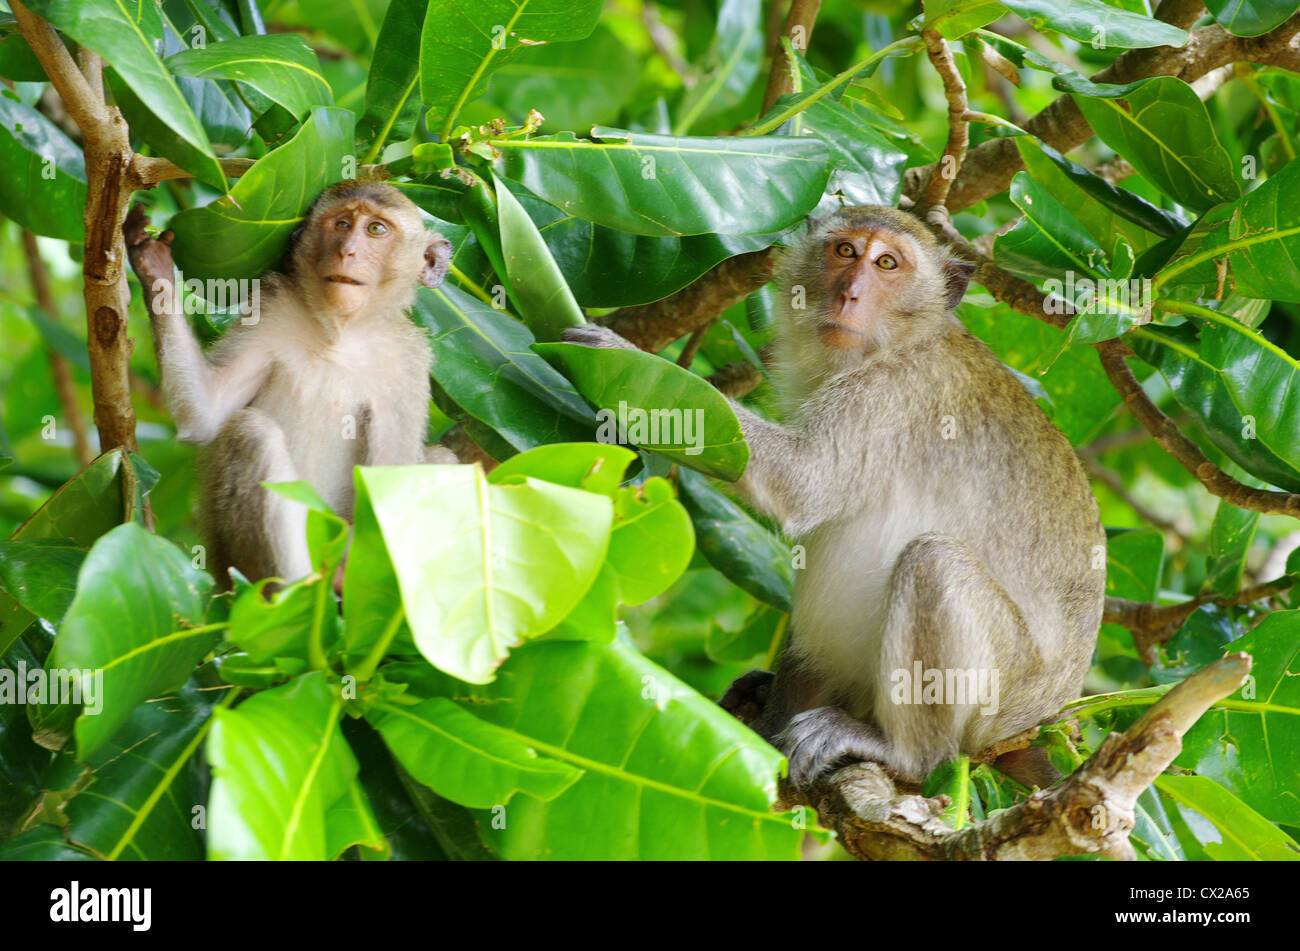 monkey sitting on the tree Stock Photo